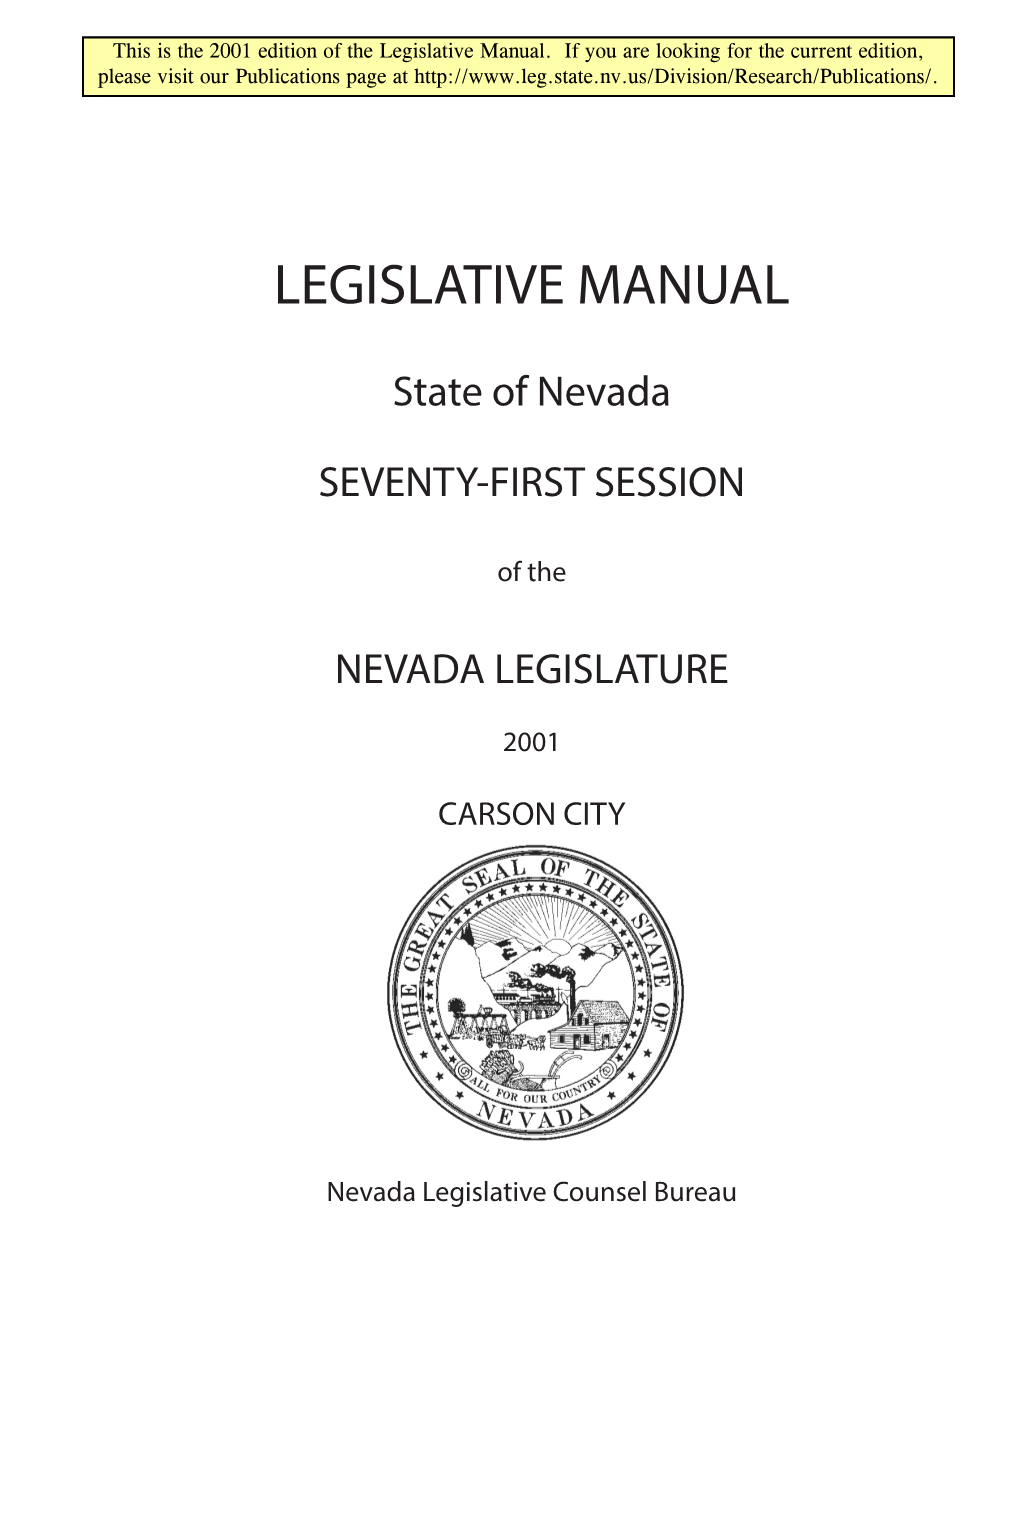 2001 Legislative Manual